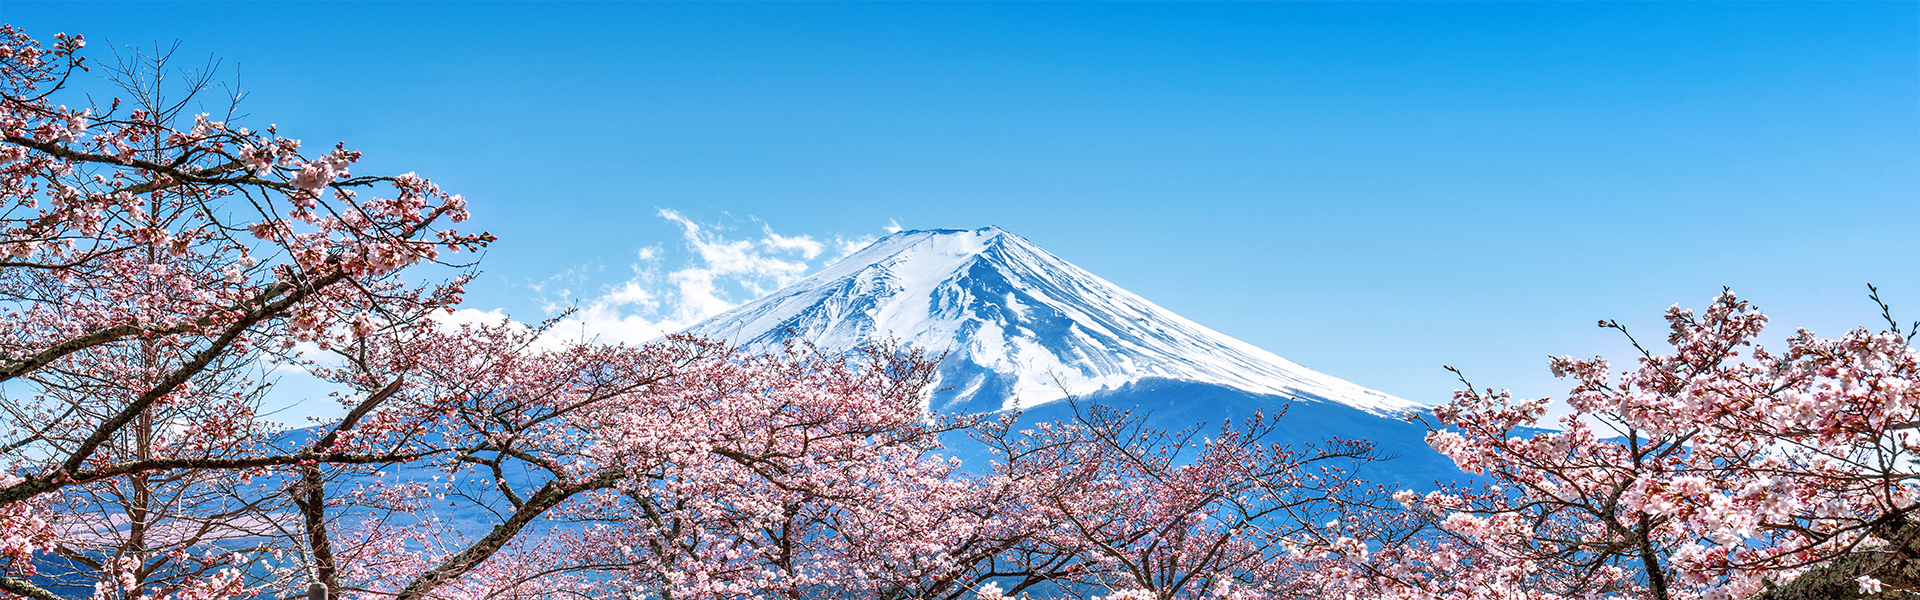 fuji mountain cherry blossoms spring japan